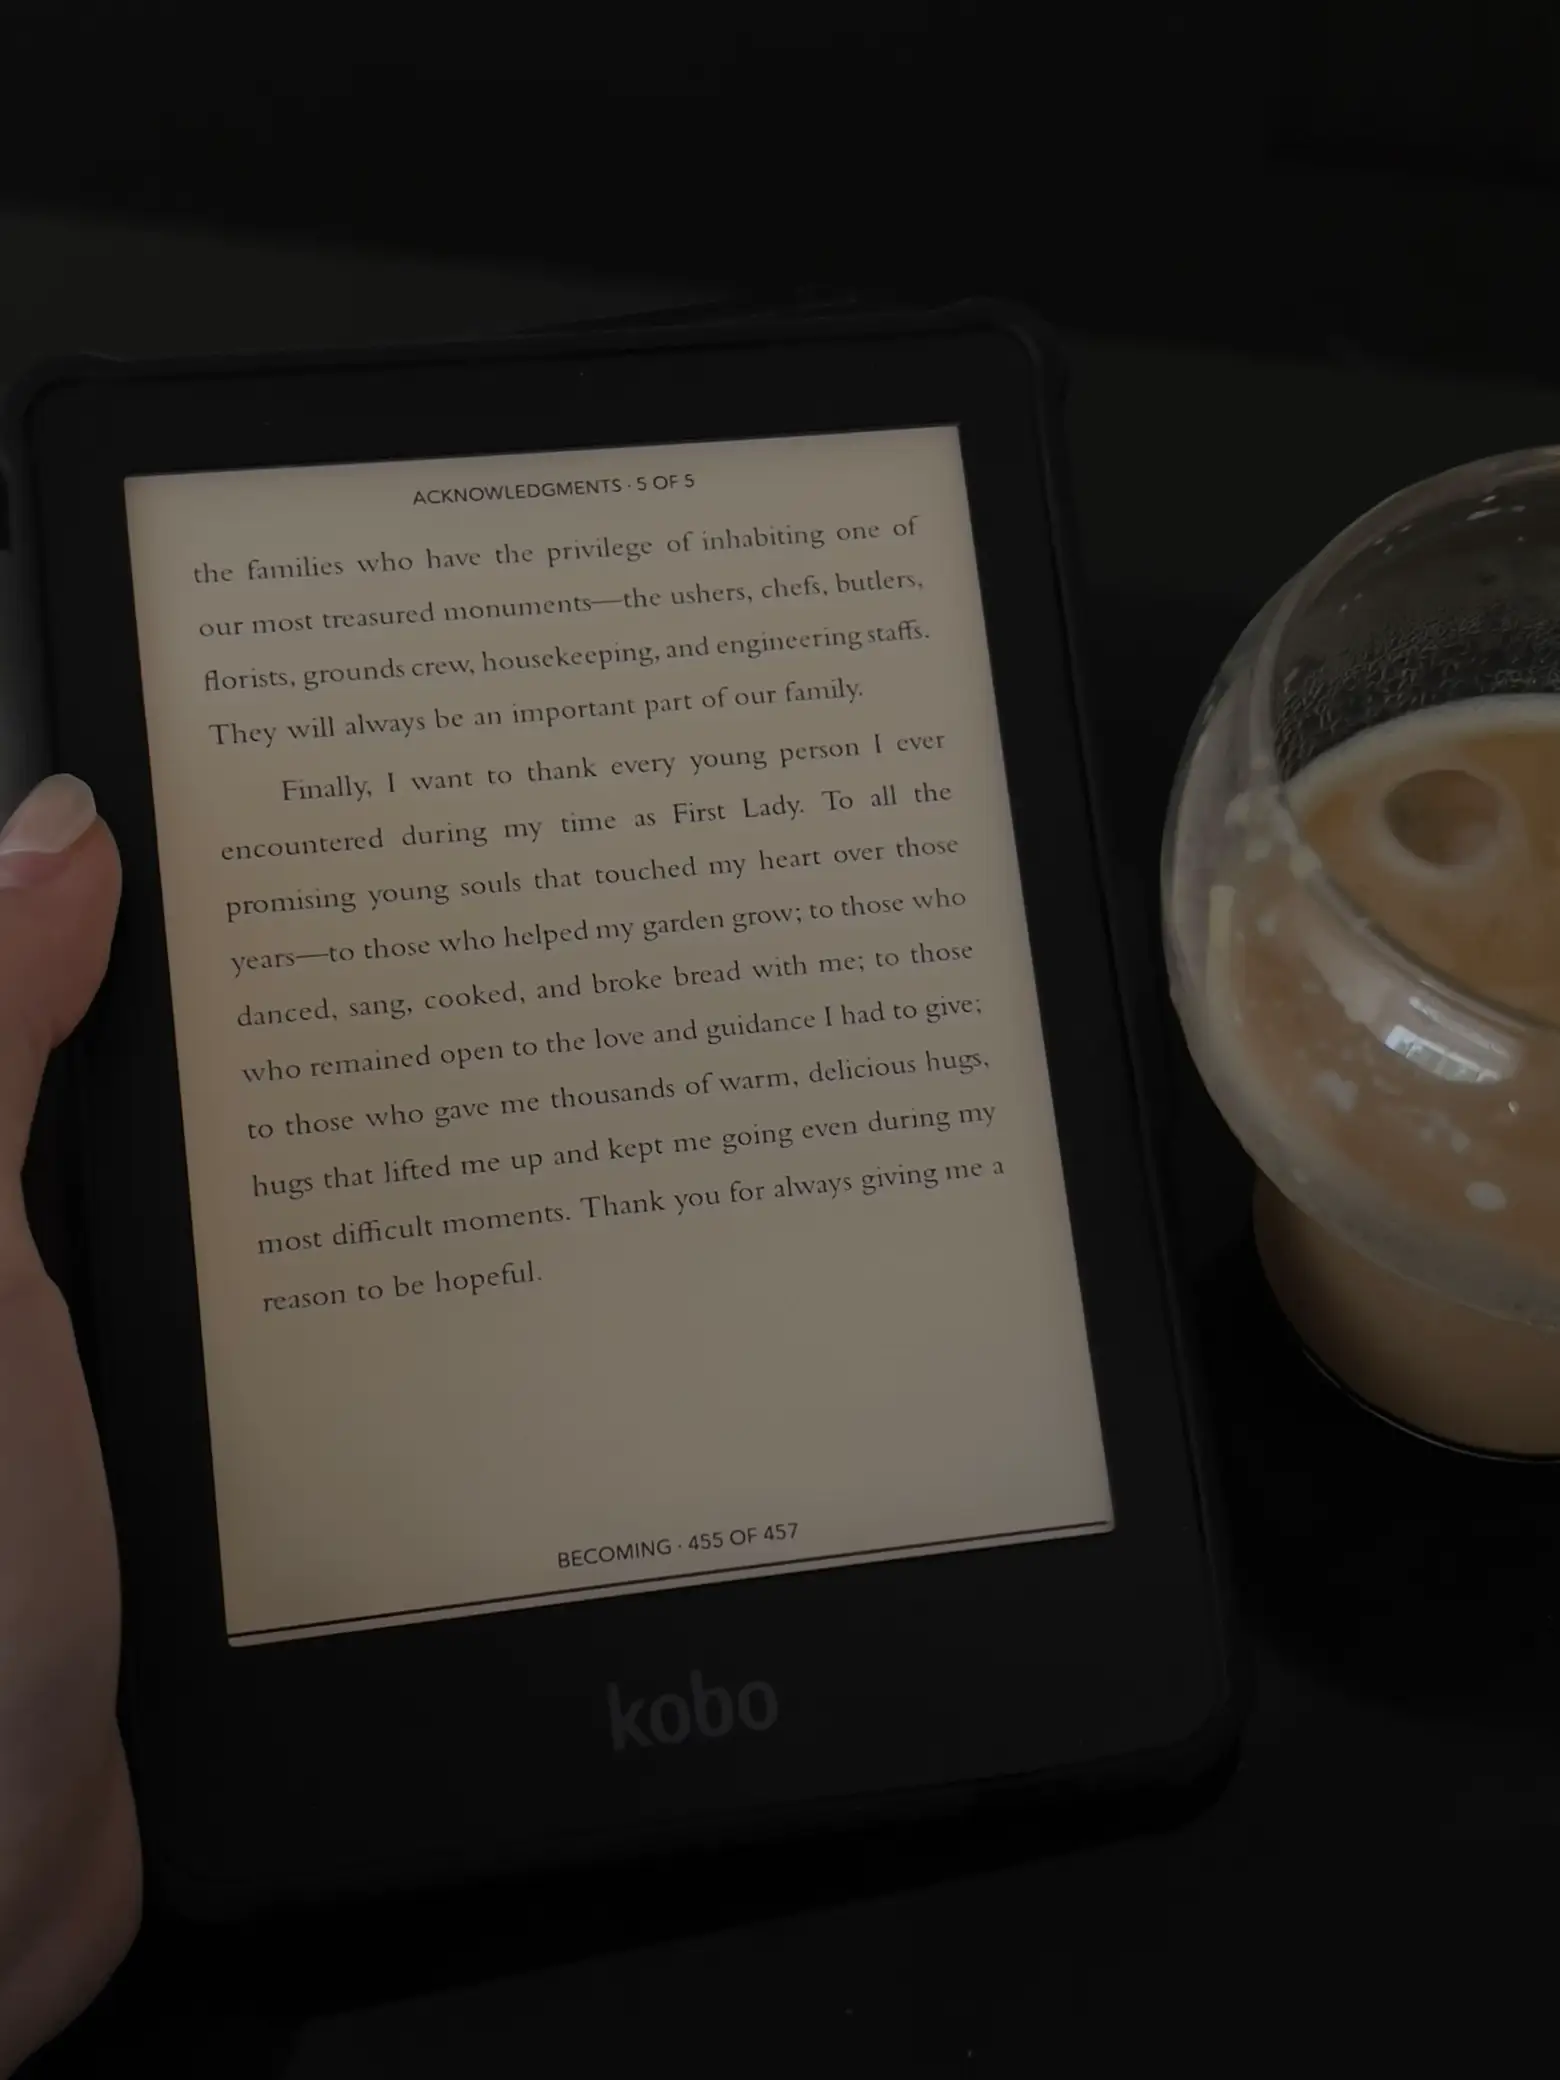 Kobo Clara HD eBook reader review - The Gadgeteer